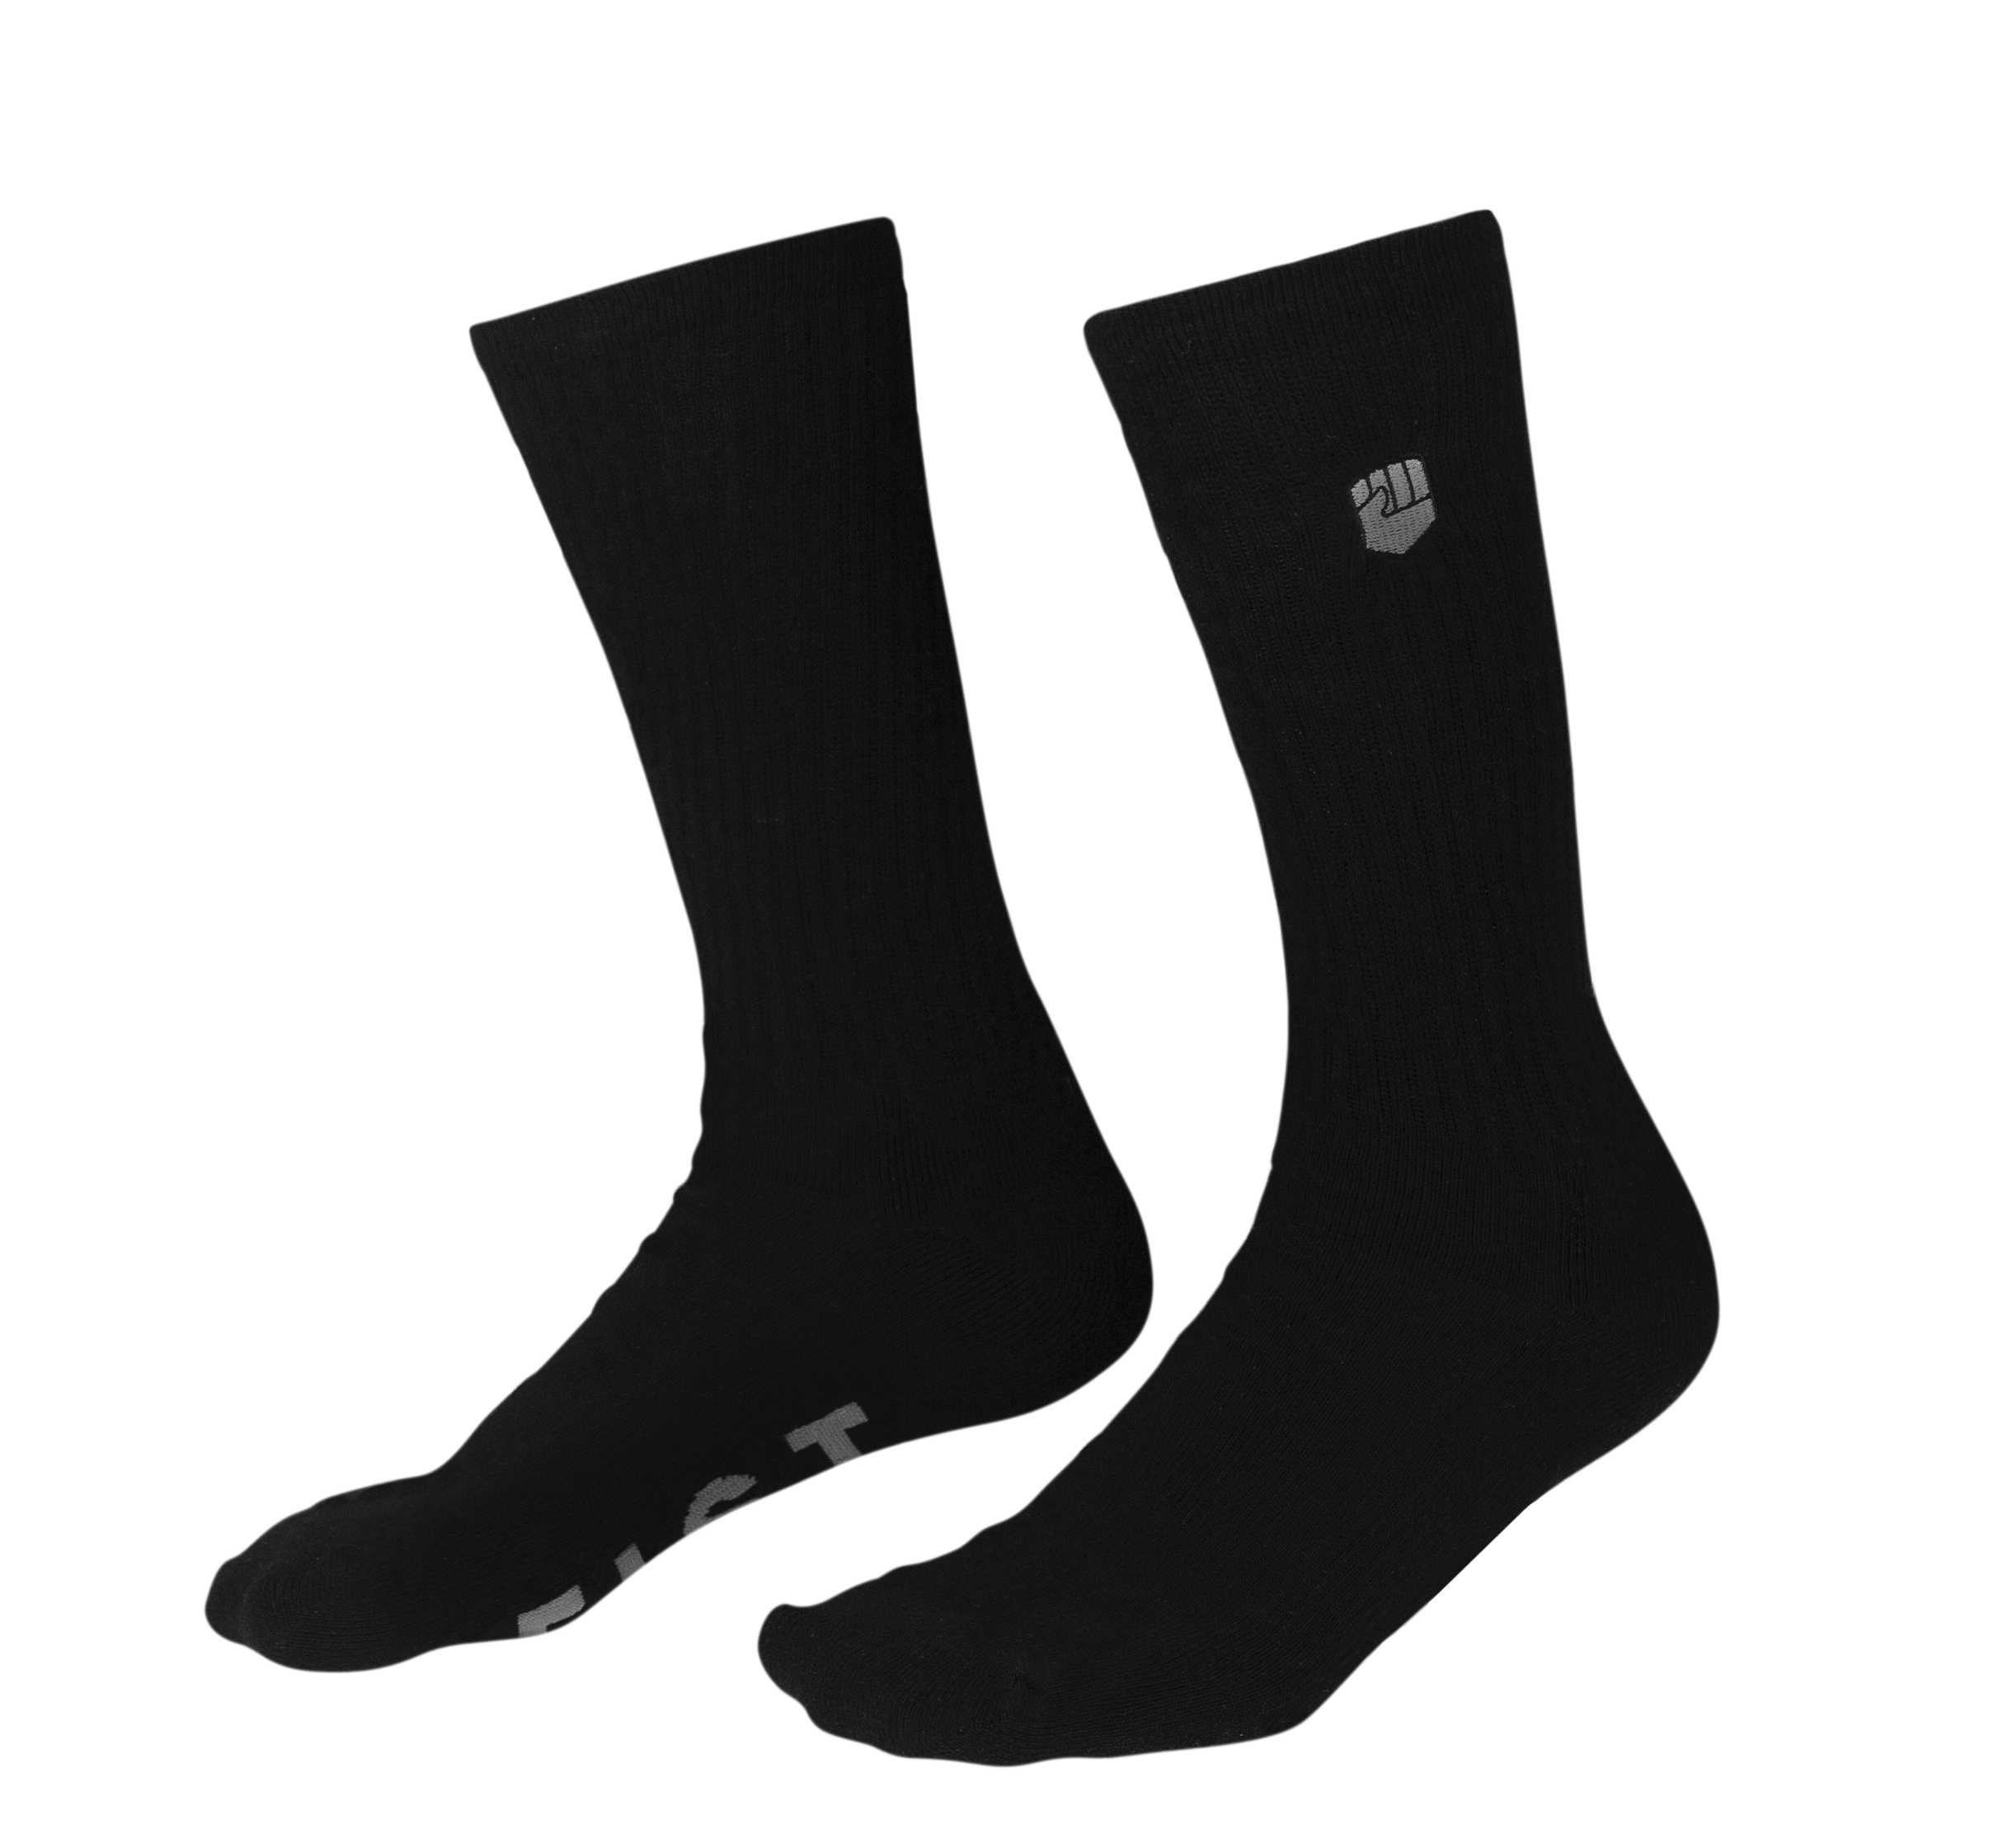 FIST Blackout Socks